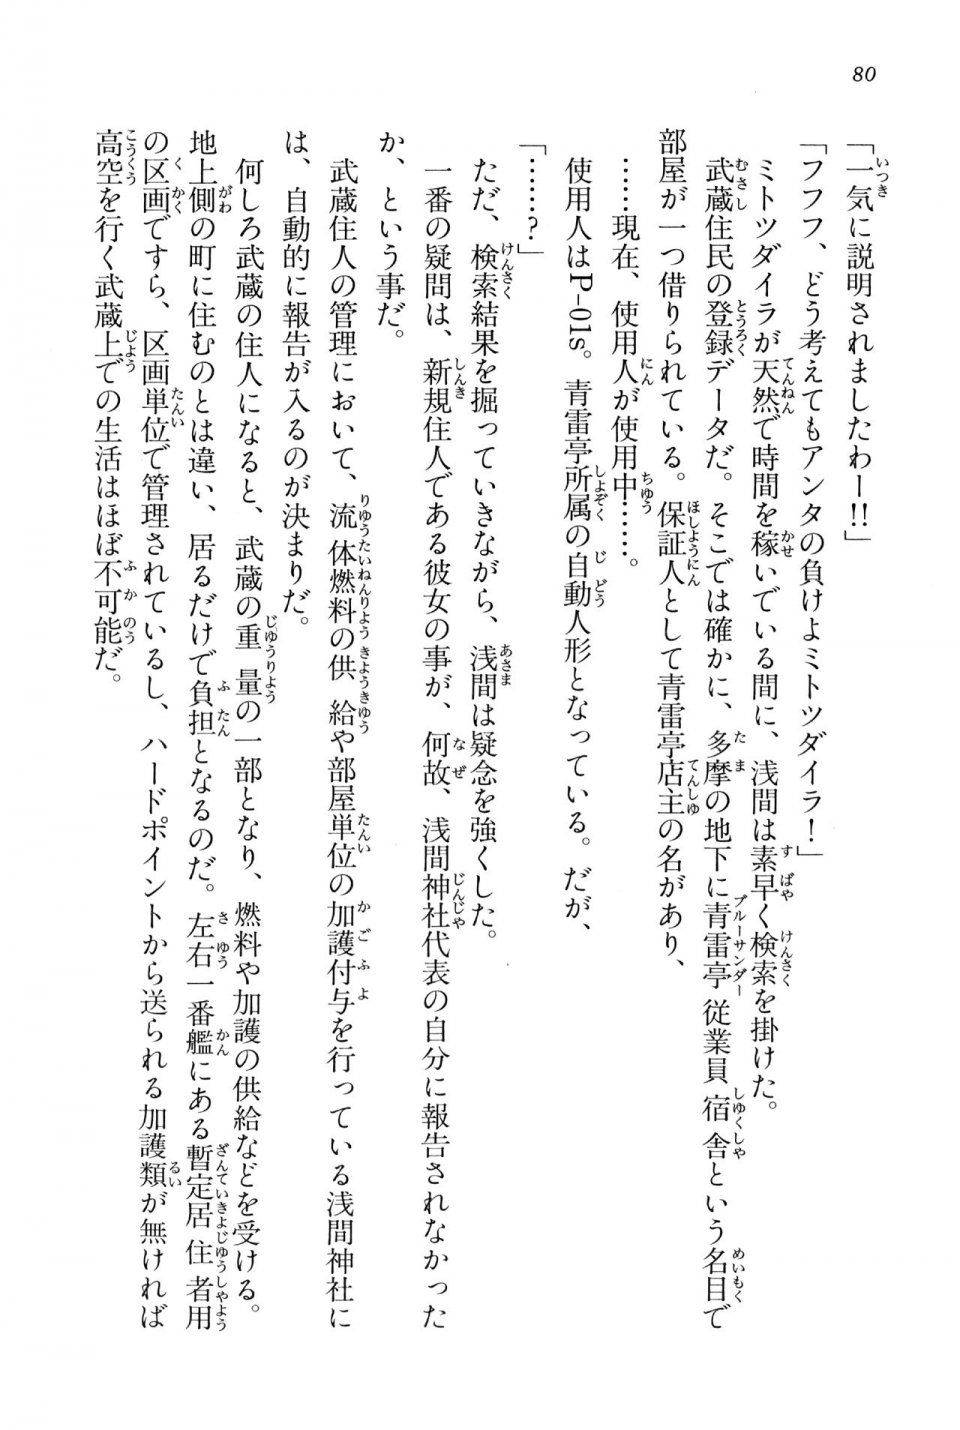 Kyoukai Senjou no Horizon BD Special Mininovel Vol 4(2B) - Photo #84